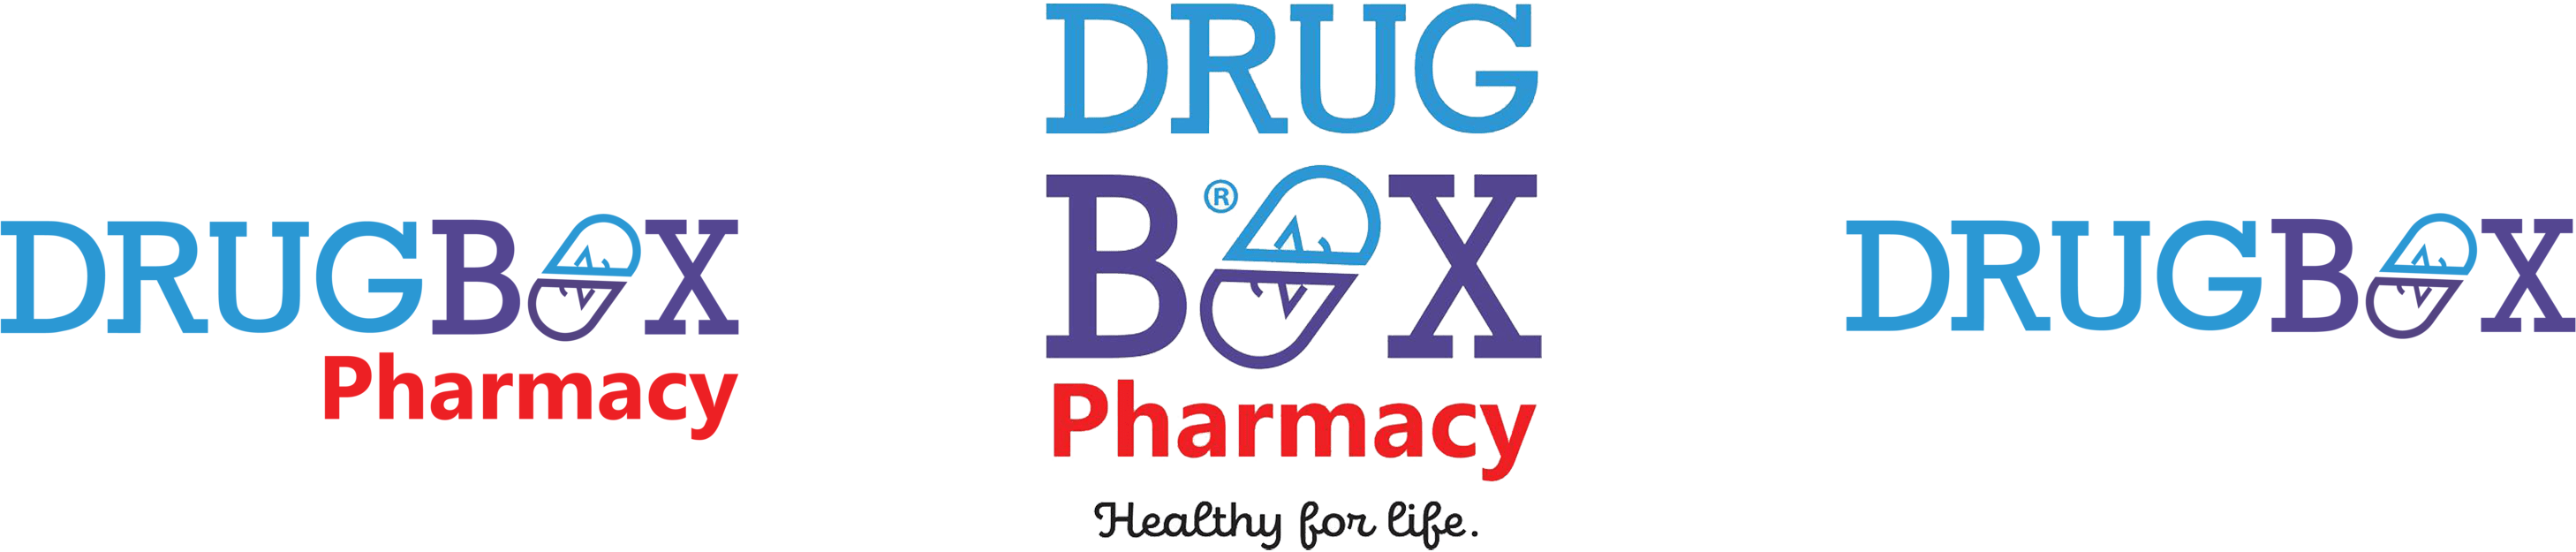 Drugbox Pharmacy